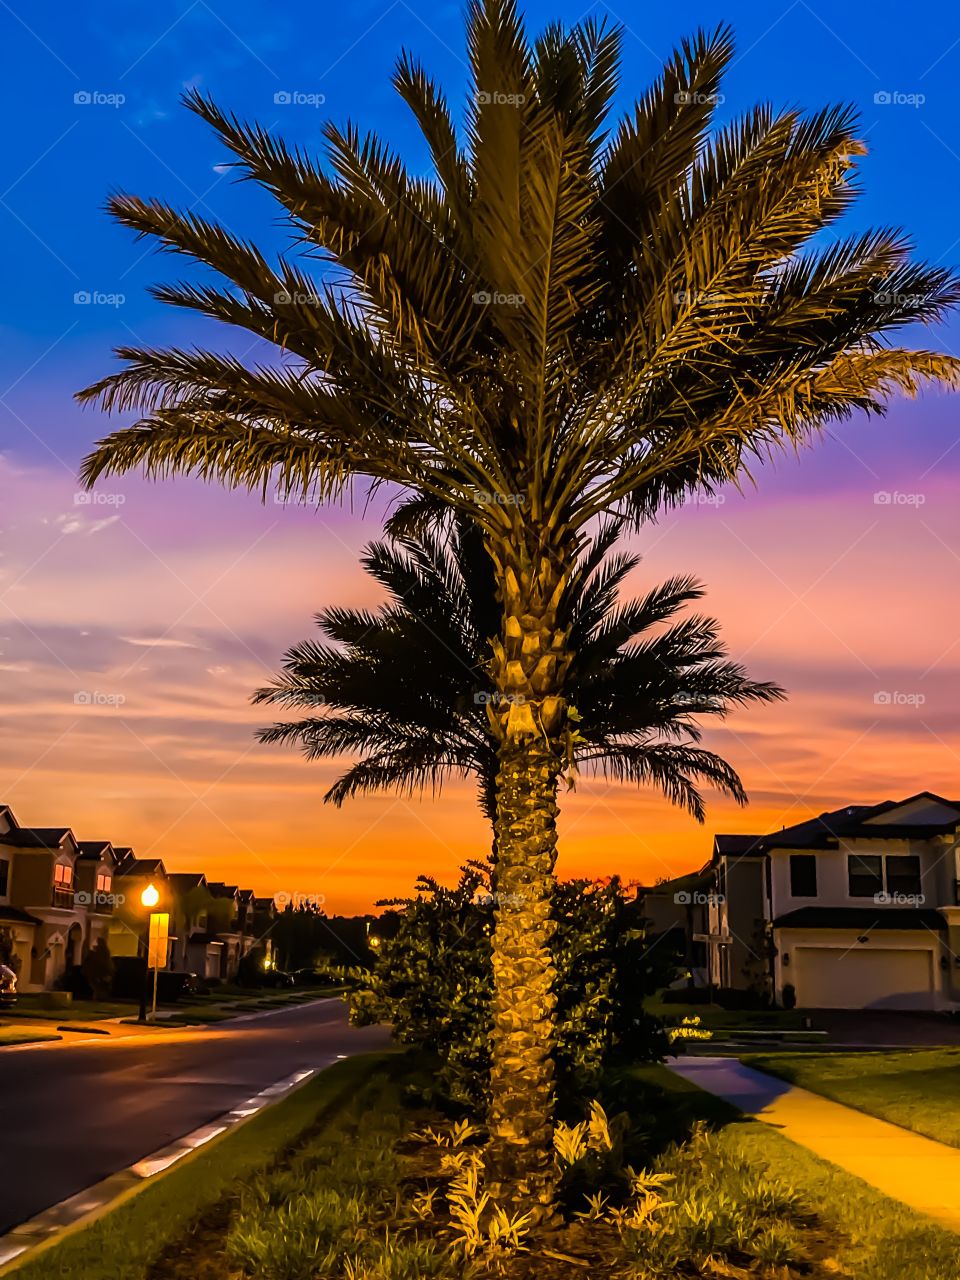 Colorful sunset and palm tree in suburban neighborhood 